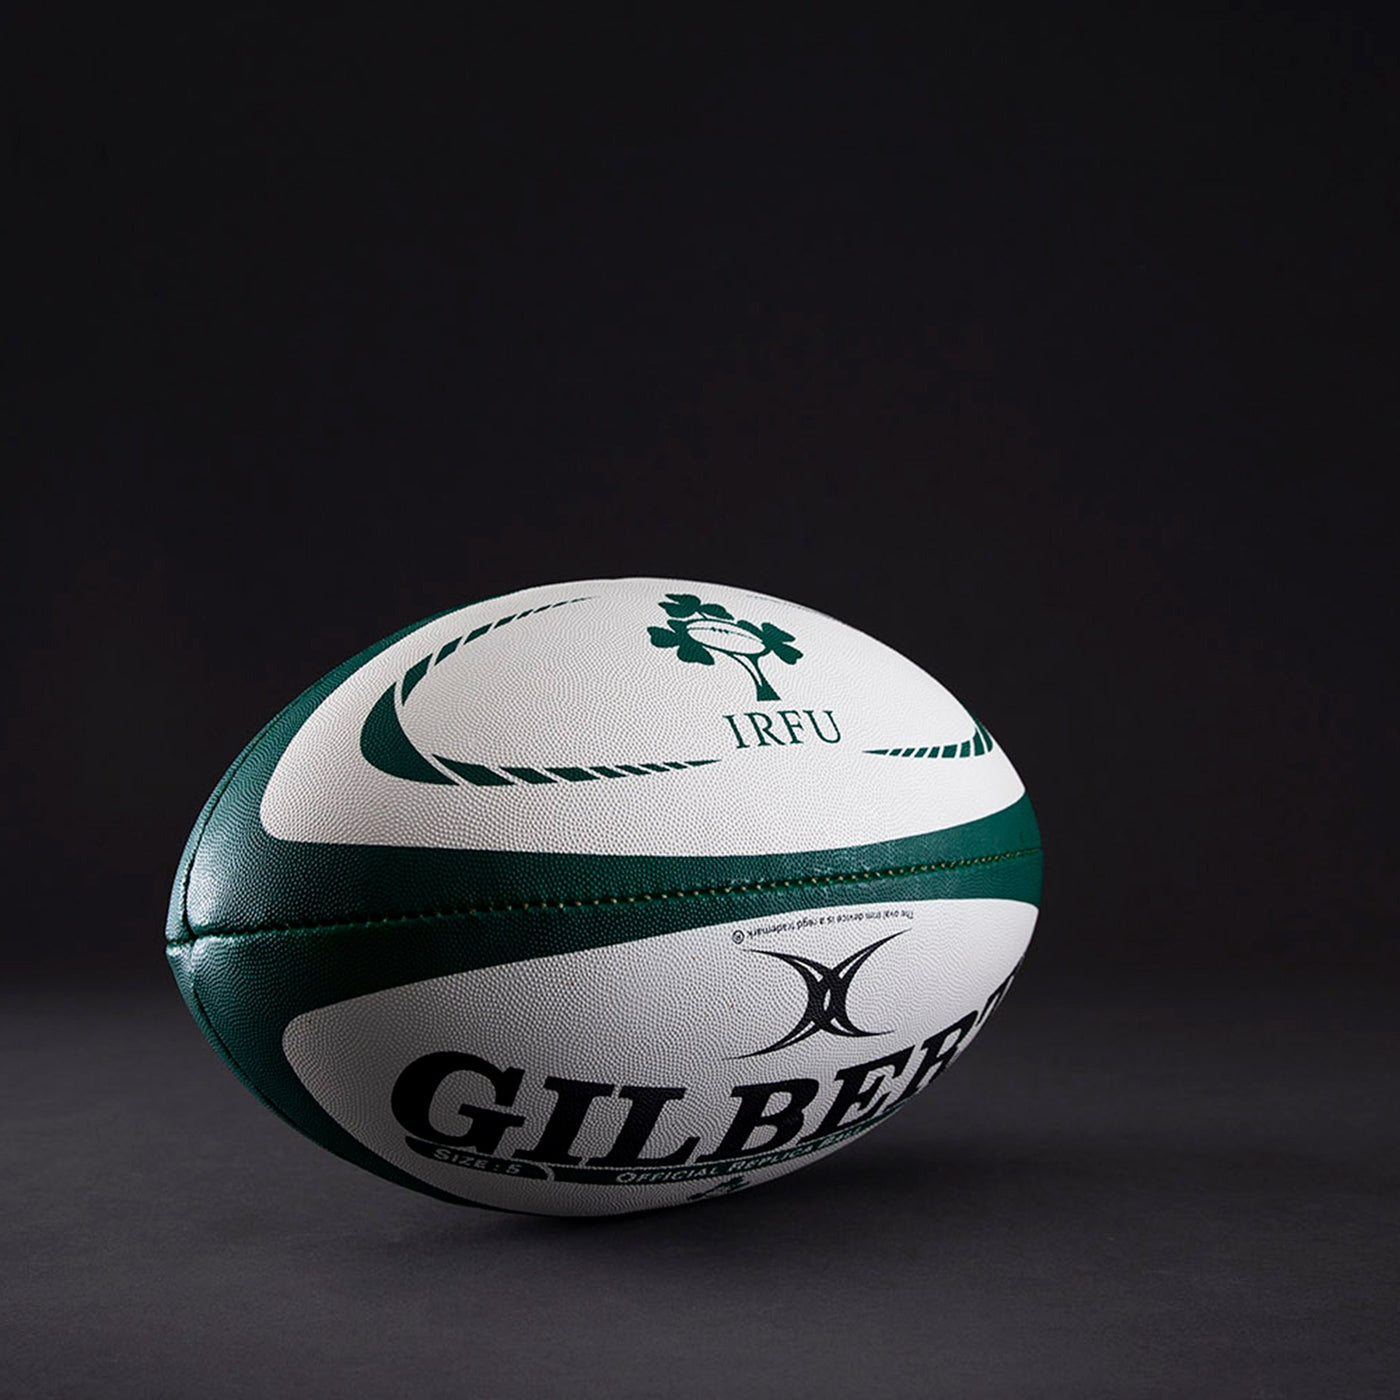 Ierland Replica Rugbybal Maat 5